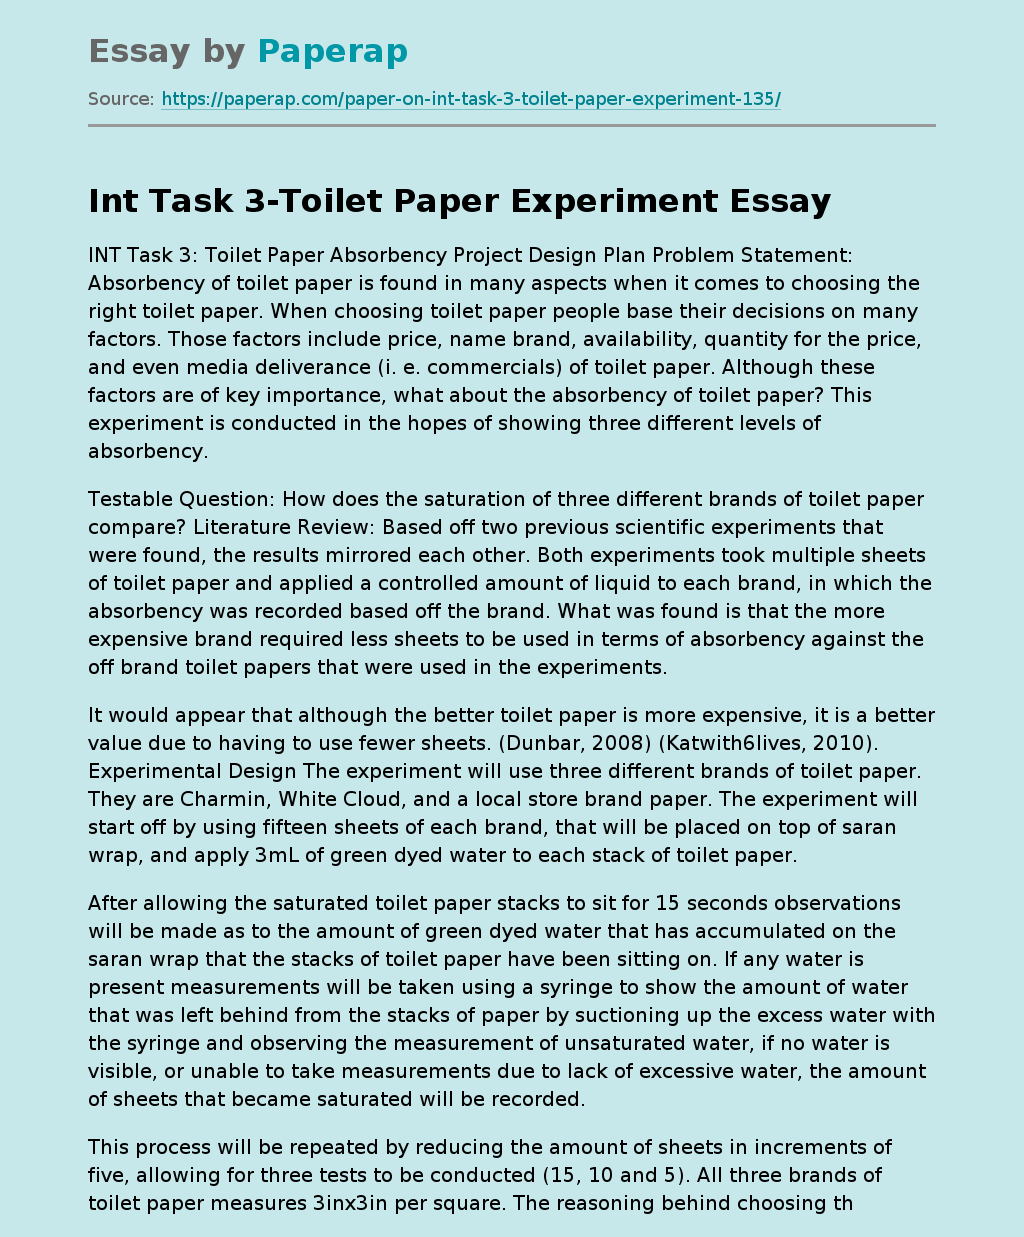 Toilet Paper Absorbency Project Design Plan